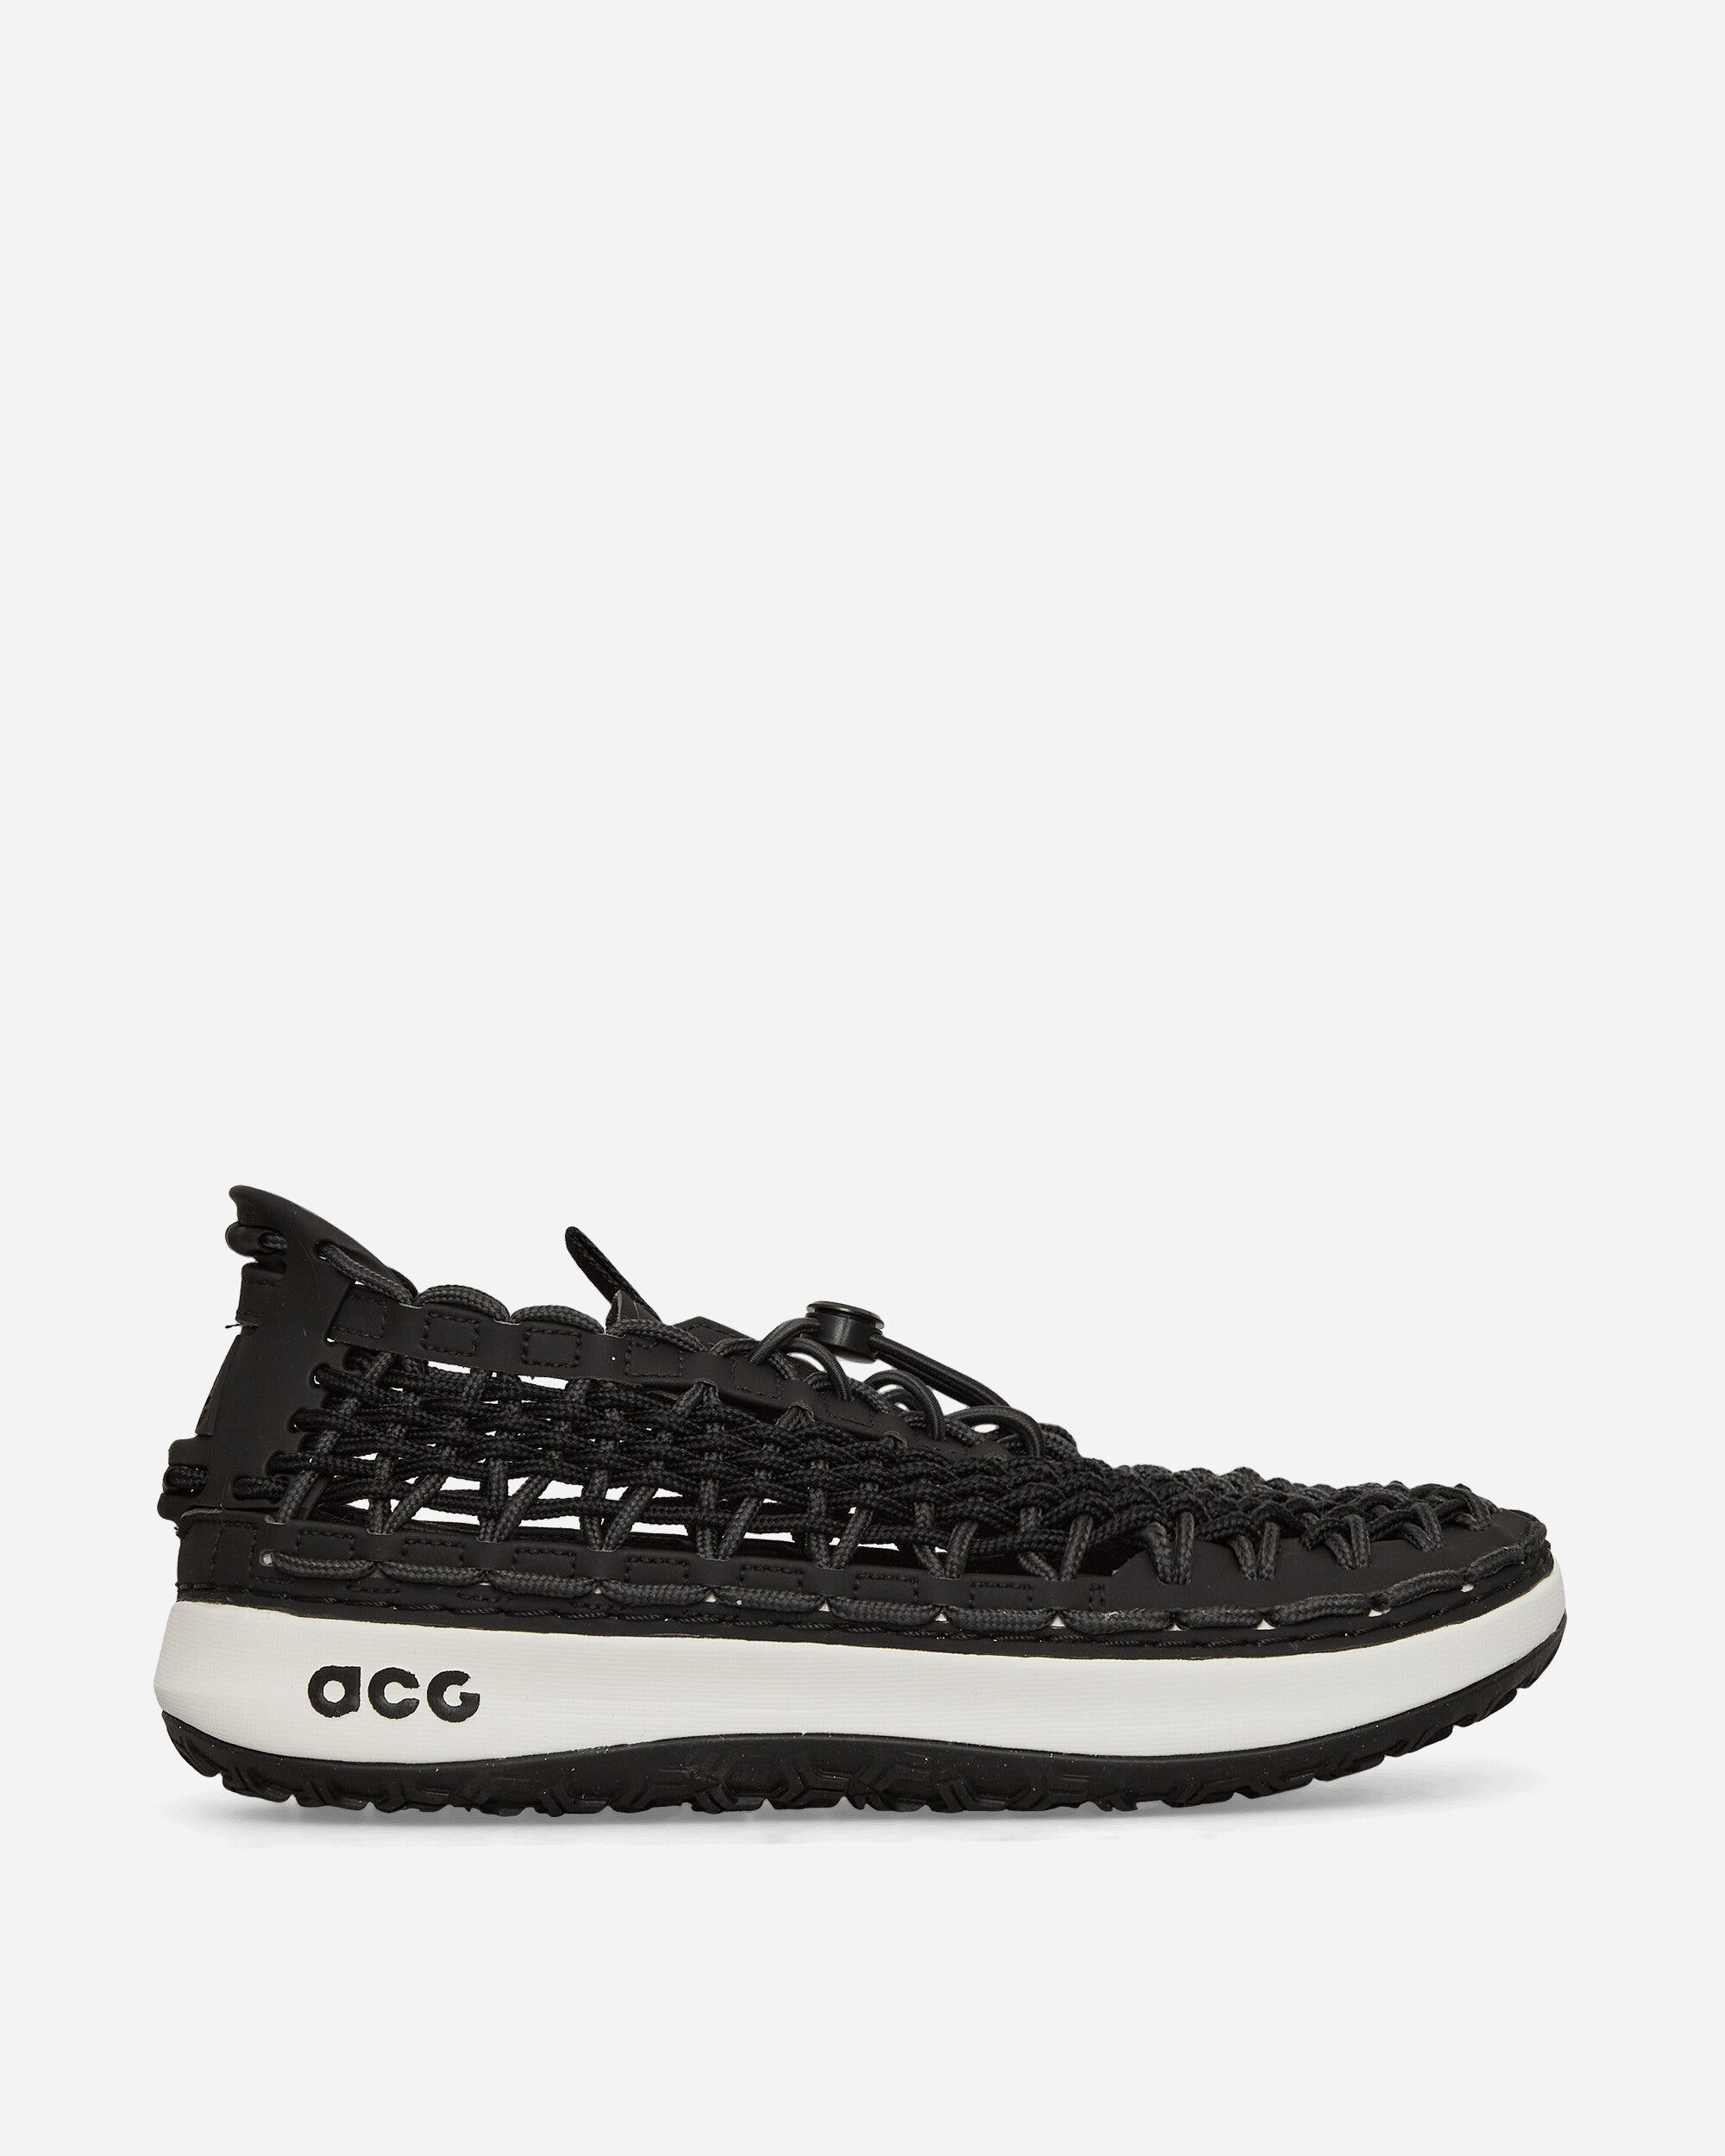 Nike Acg Watercat+ Black/Anthracite Sneakers Low CZ0931-003